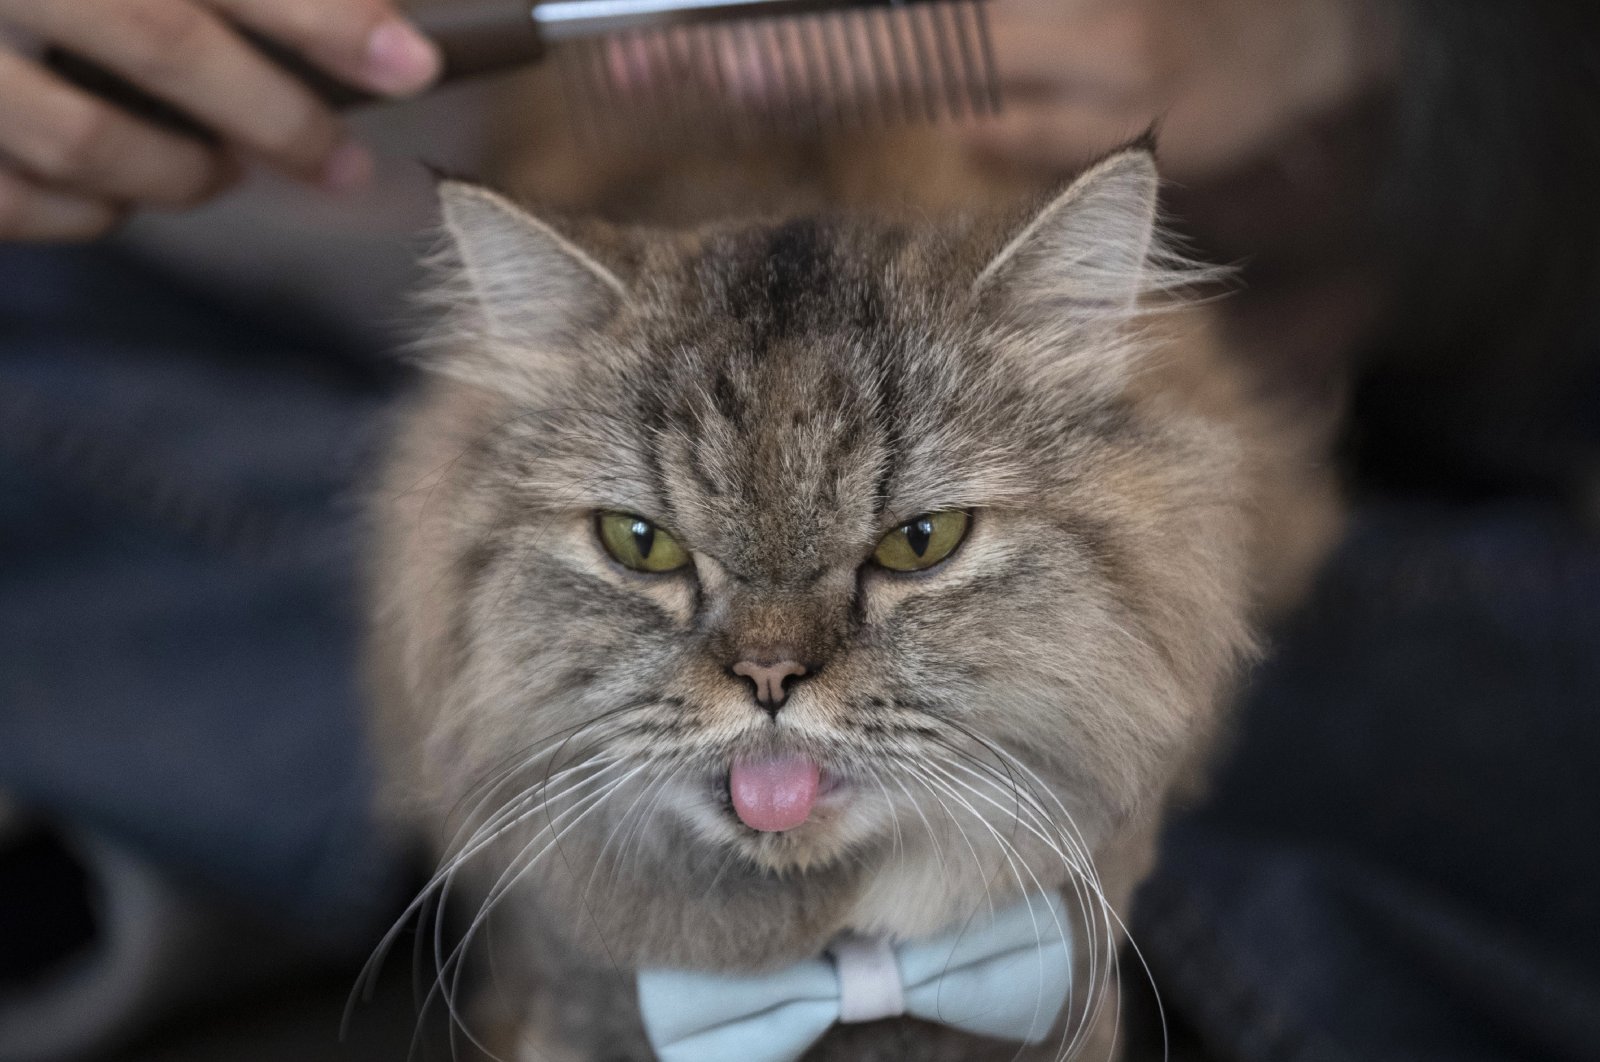 A cat has its hair brushed at the Caturday Cafe in Bangkok, Thailand, May 8, 2020. (AP Photo)